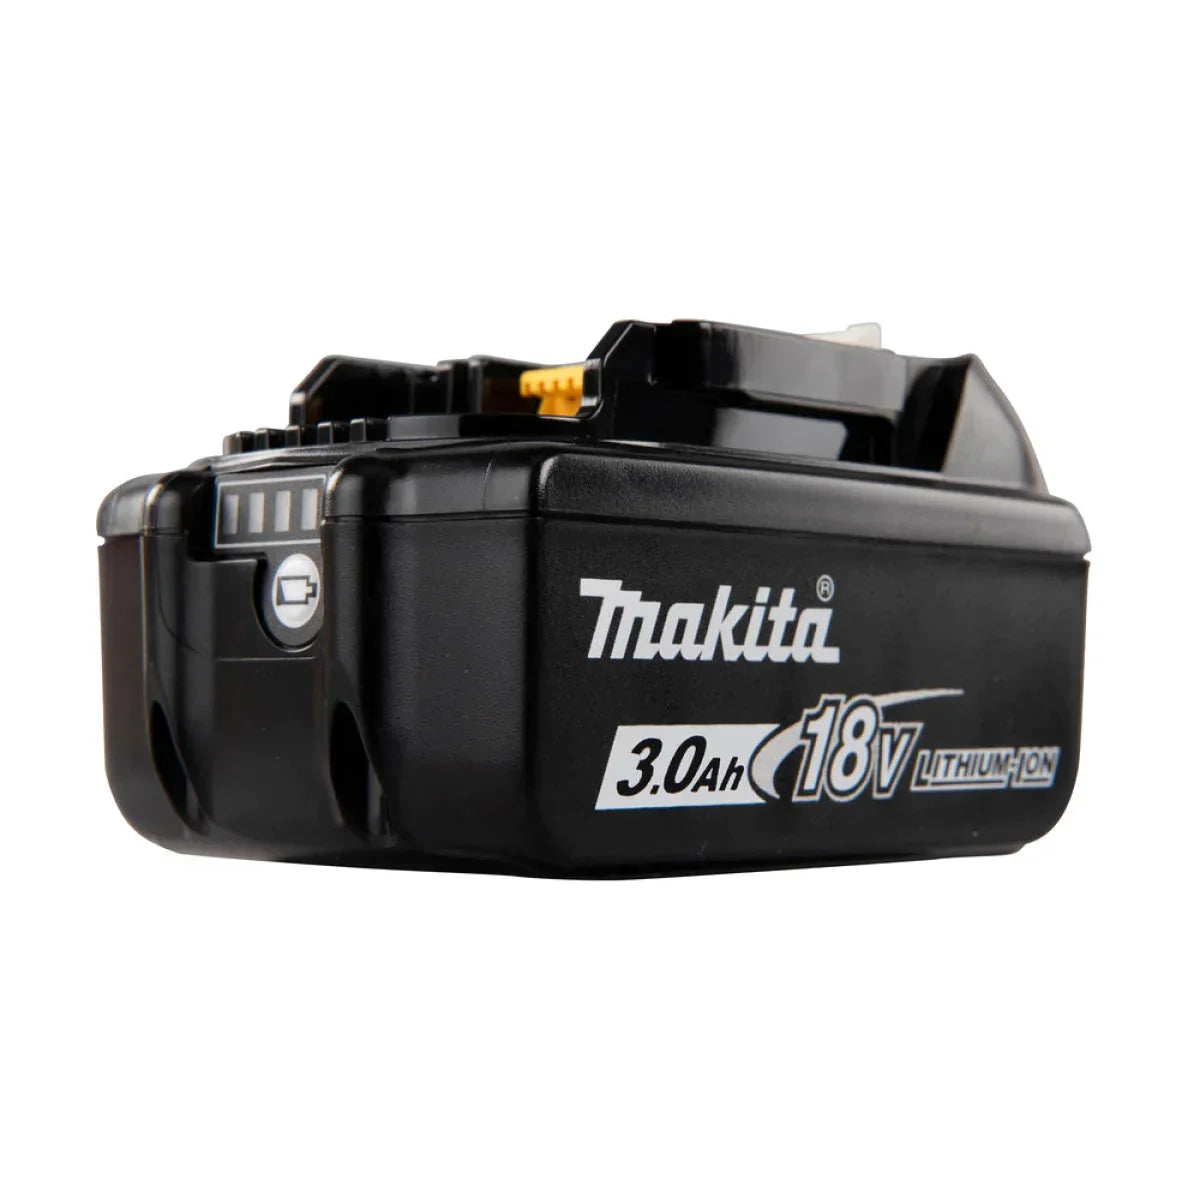 Makita-BL1830B 18V - 3.0Ah-Werkzeug-Akku 18V-Masori.de